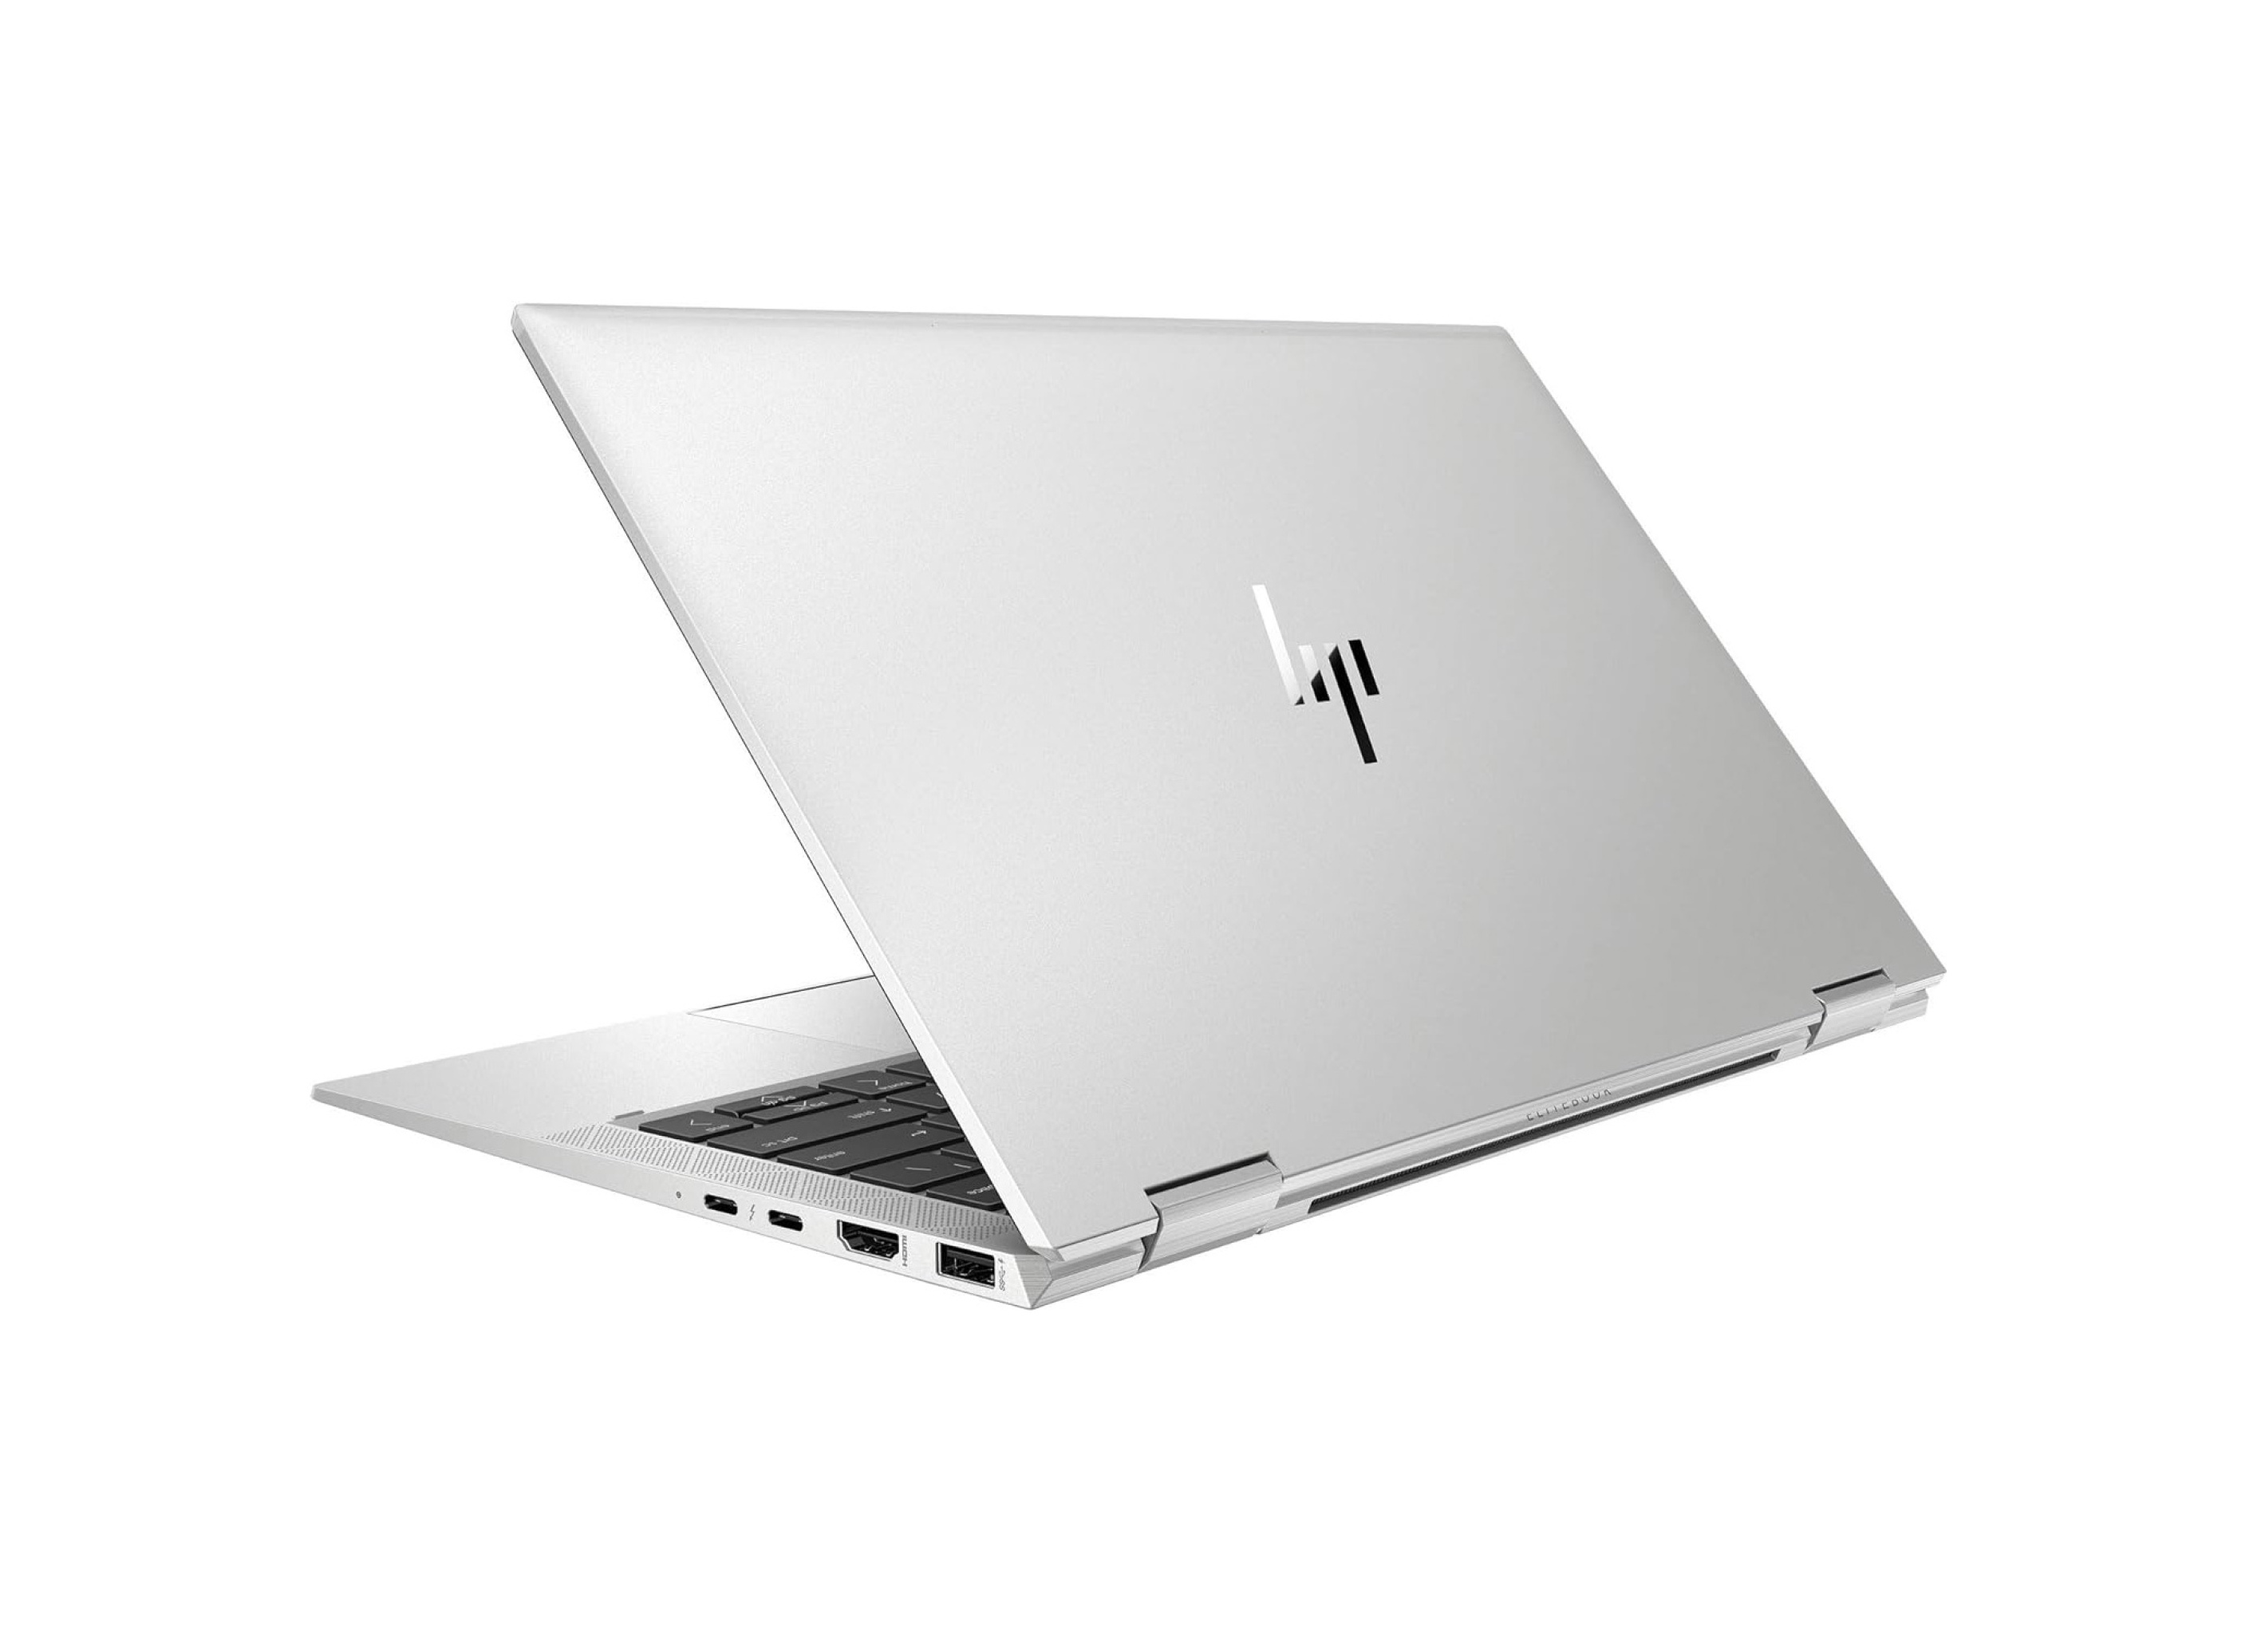  خرید و قیمت لپ تاپ HP Elite 1040 G7 X360 i5 10th gen | لاکچری لپ تاپ 